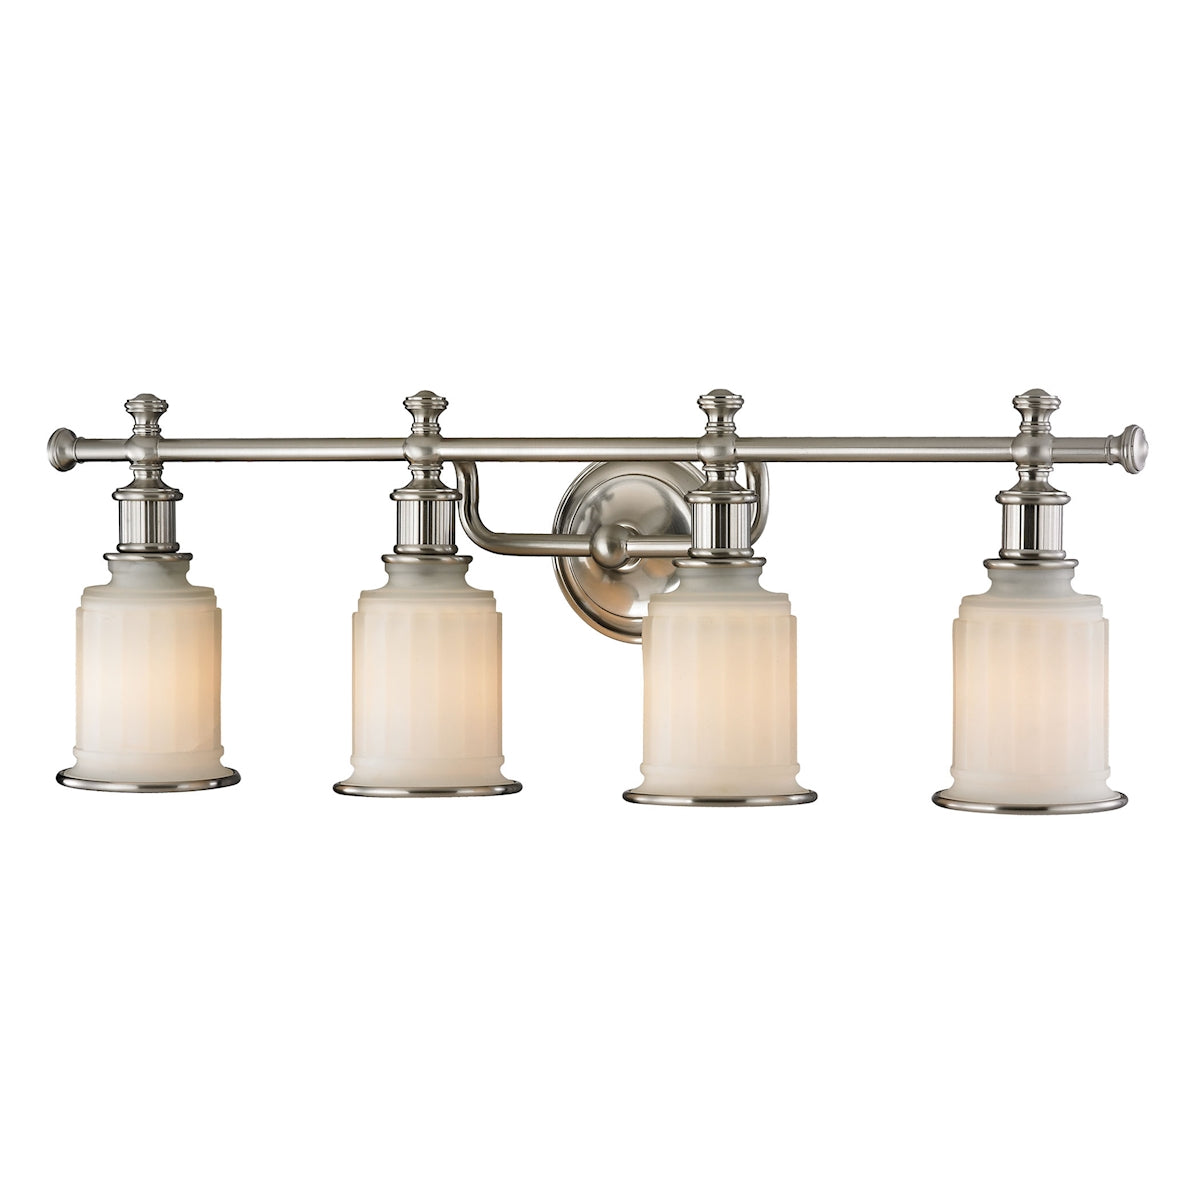 Acadia 4-Light Vanity Lamp in Brushed Nickel with Opal Reeded Pressed Glass